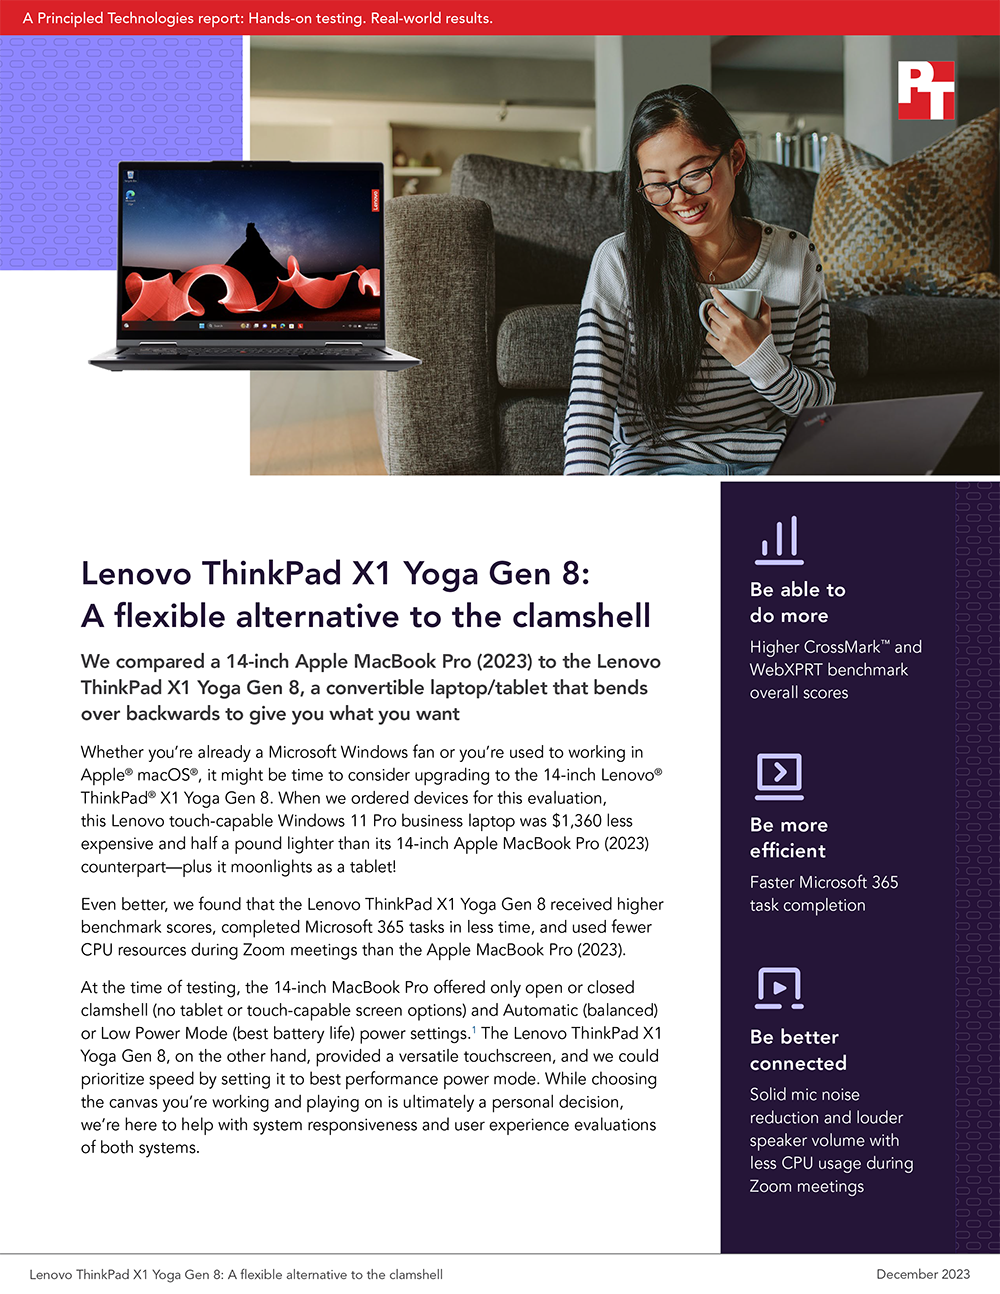 Lenovo ThinkPad X1 Yoga Gen 8: A flexible alternative to the clamshell